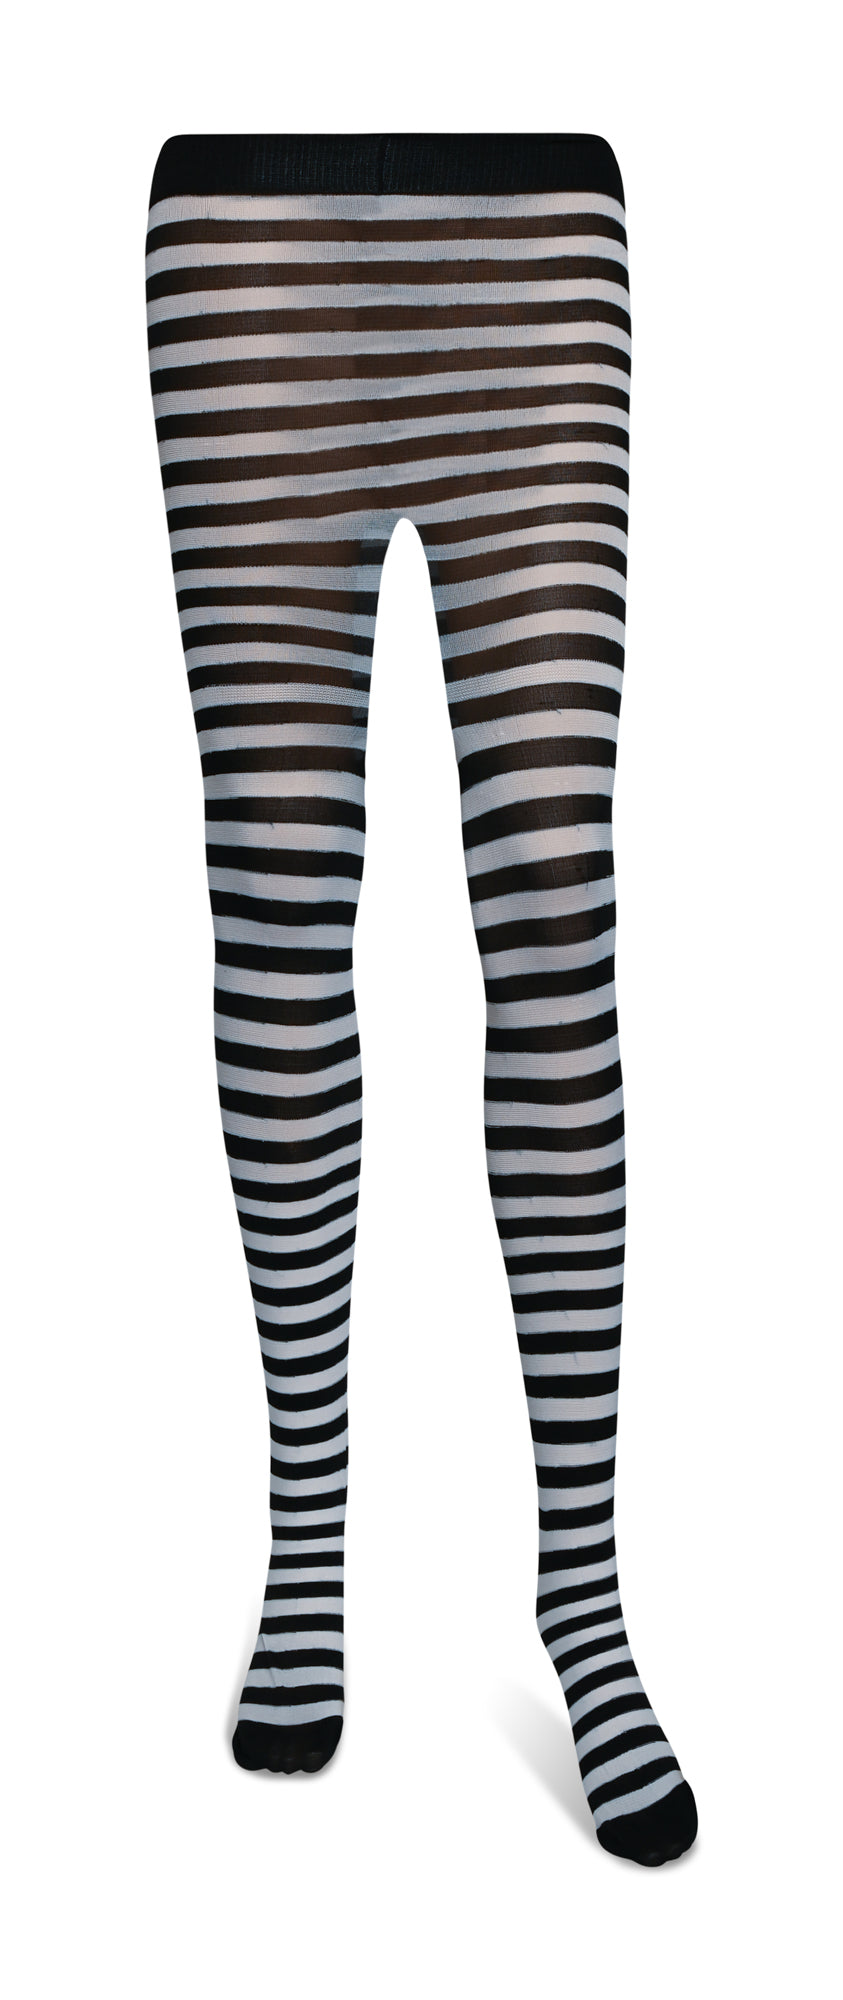 Women's Nylon Striped Tights Black/White, 3 Pack